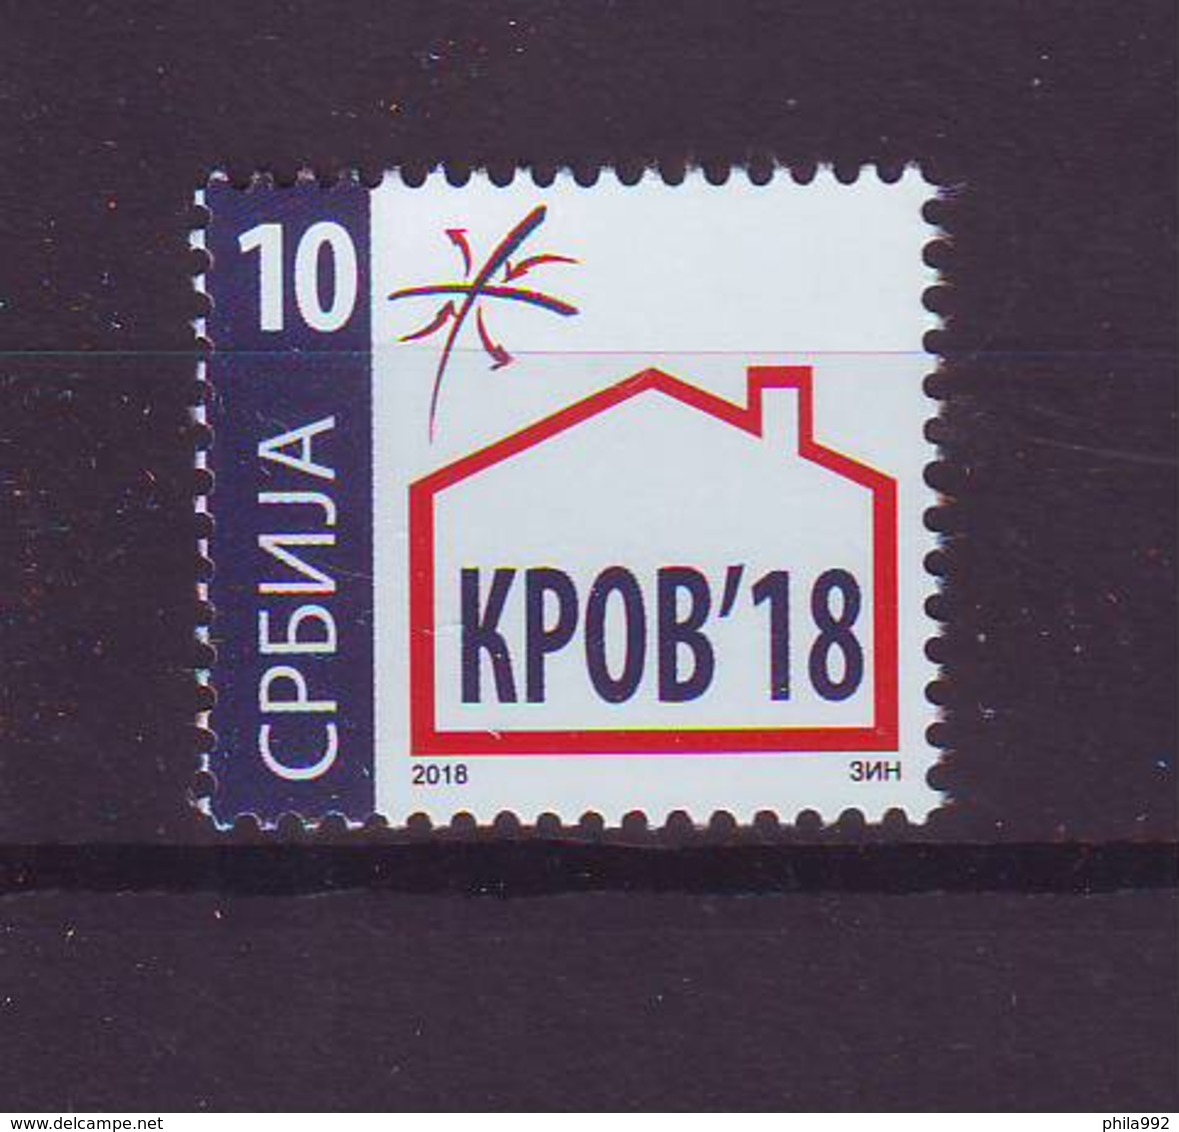 Serbia 2018 Y Charity Stamp "Roof" "Krov" MNH - Serbia